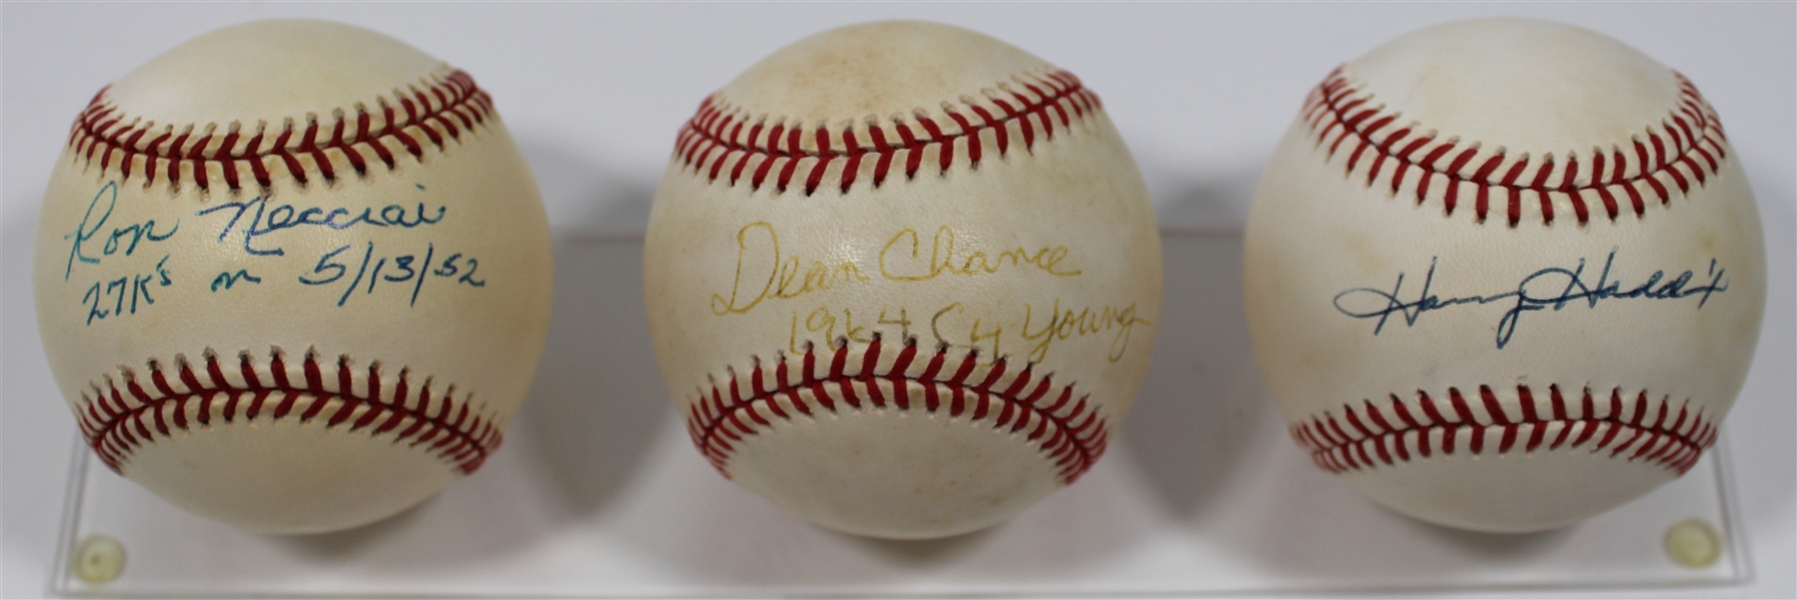 Dean Chance - Ron Necciai - Harvey Haddix Signed Baseballs - JSA